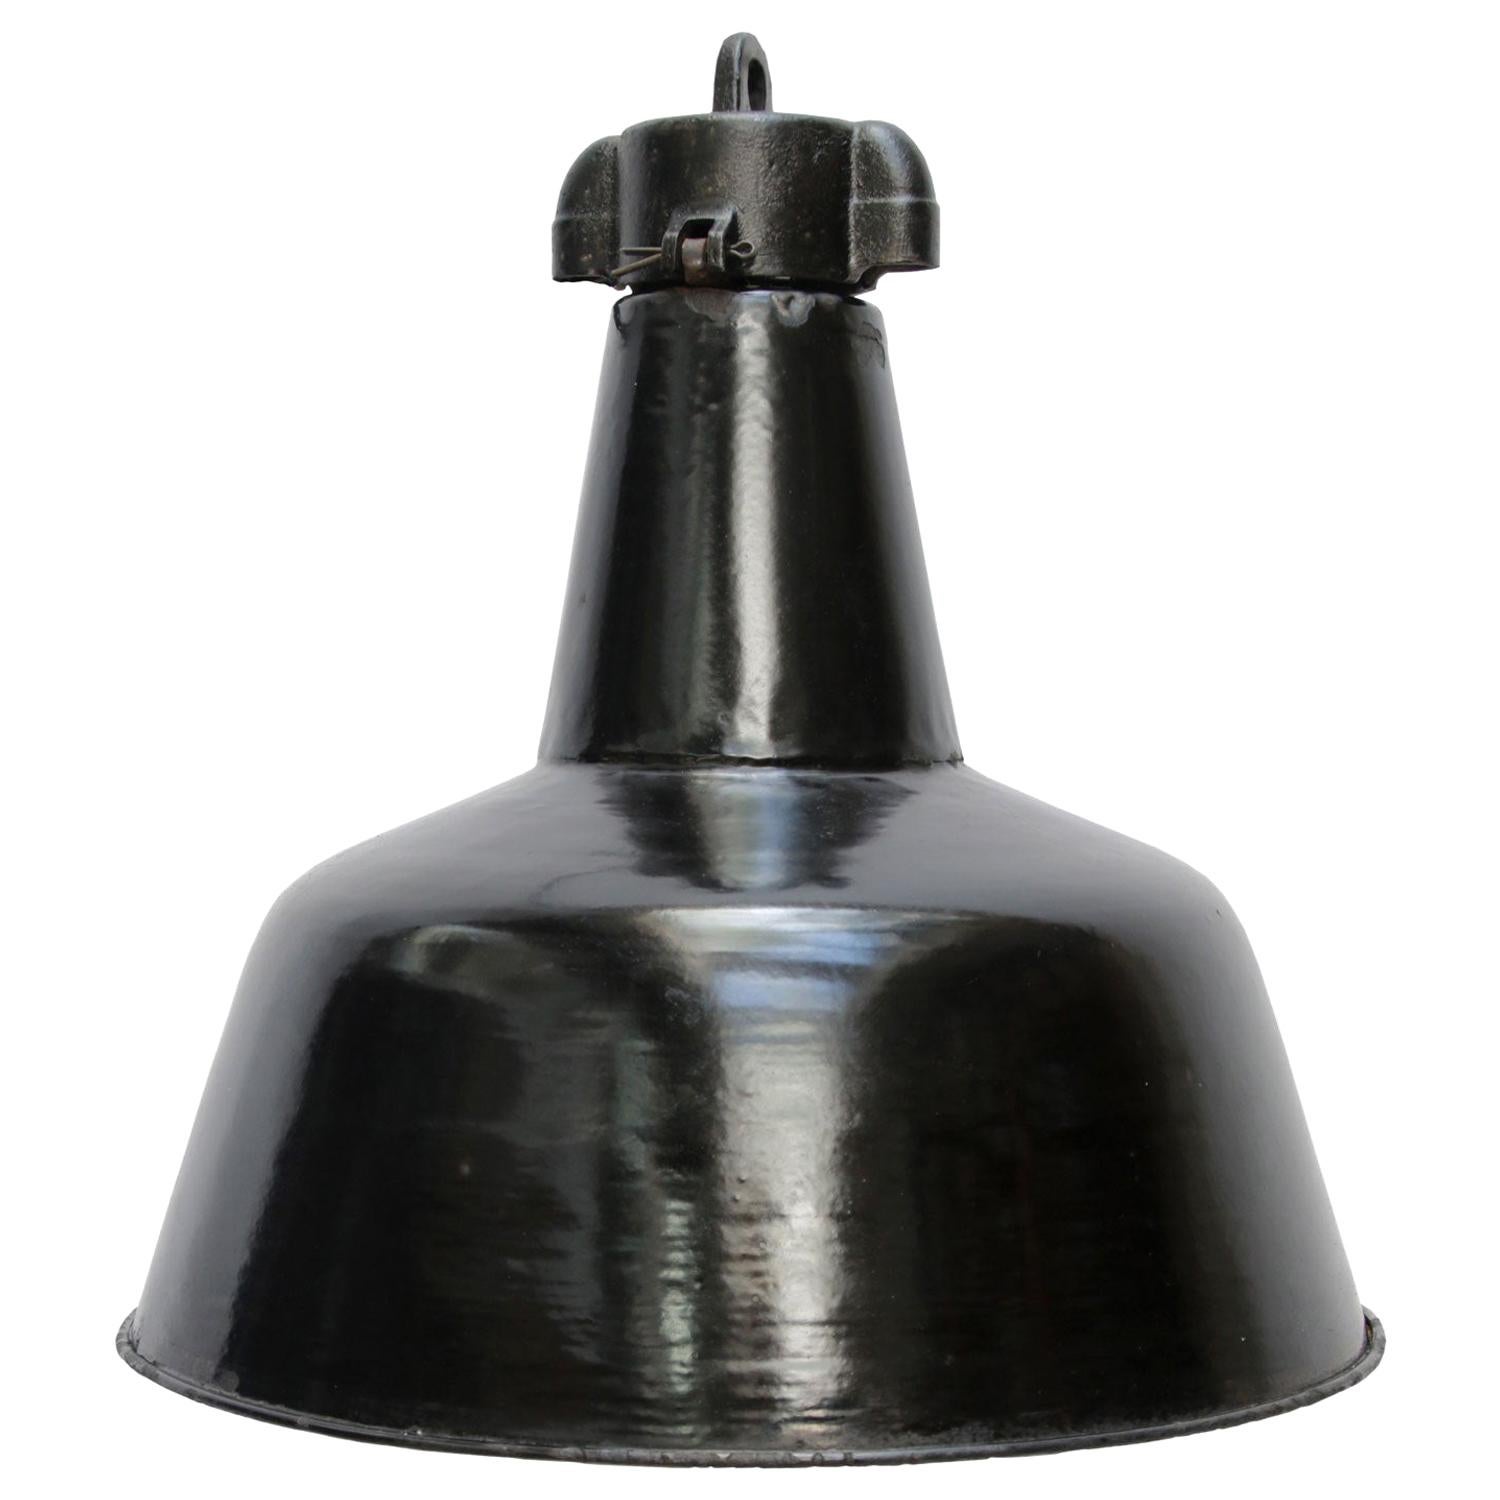 Bauhaus Black Enamel Vintage Industrial Pendant Light